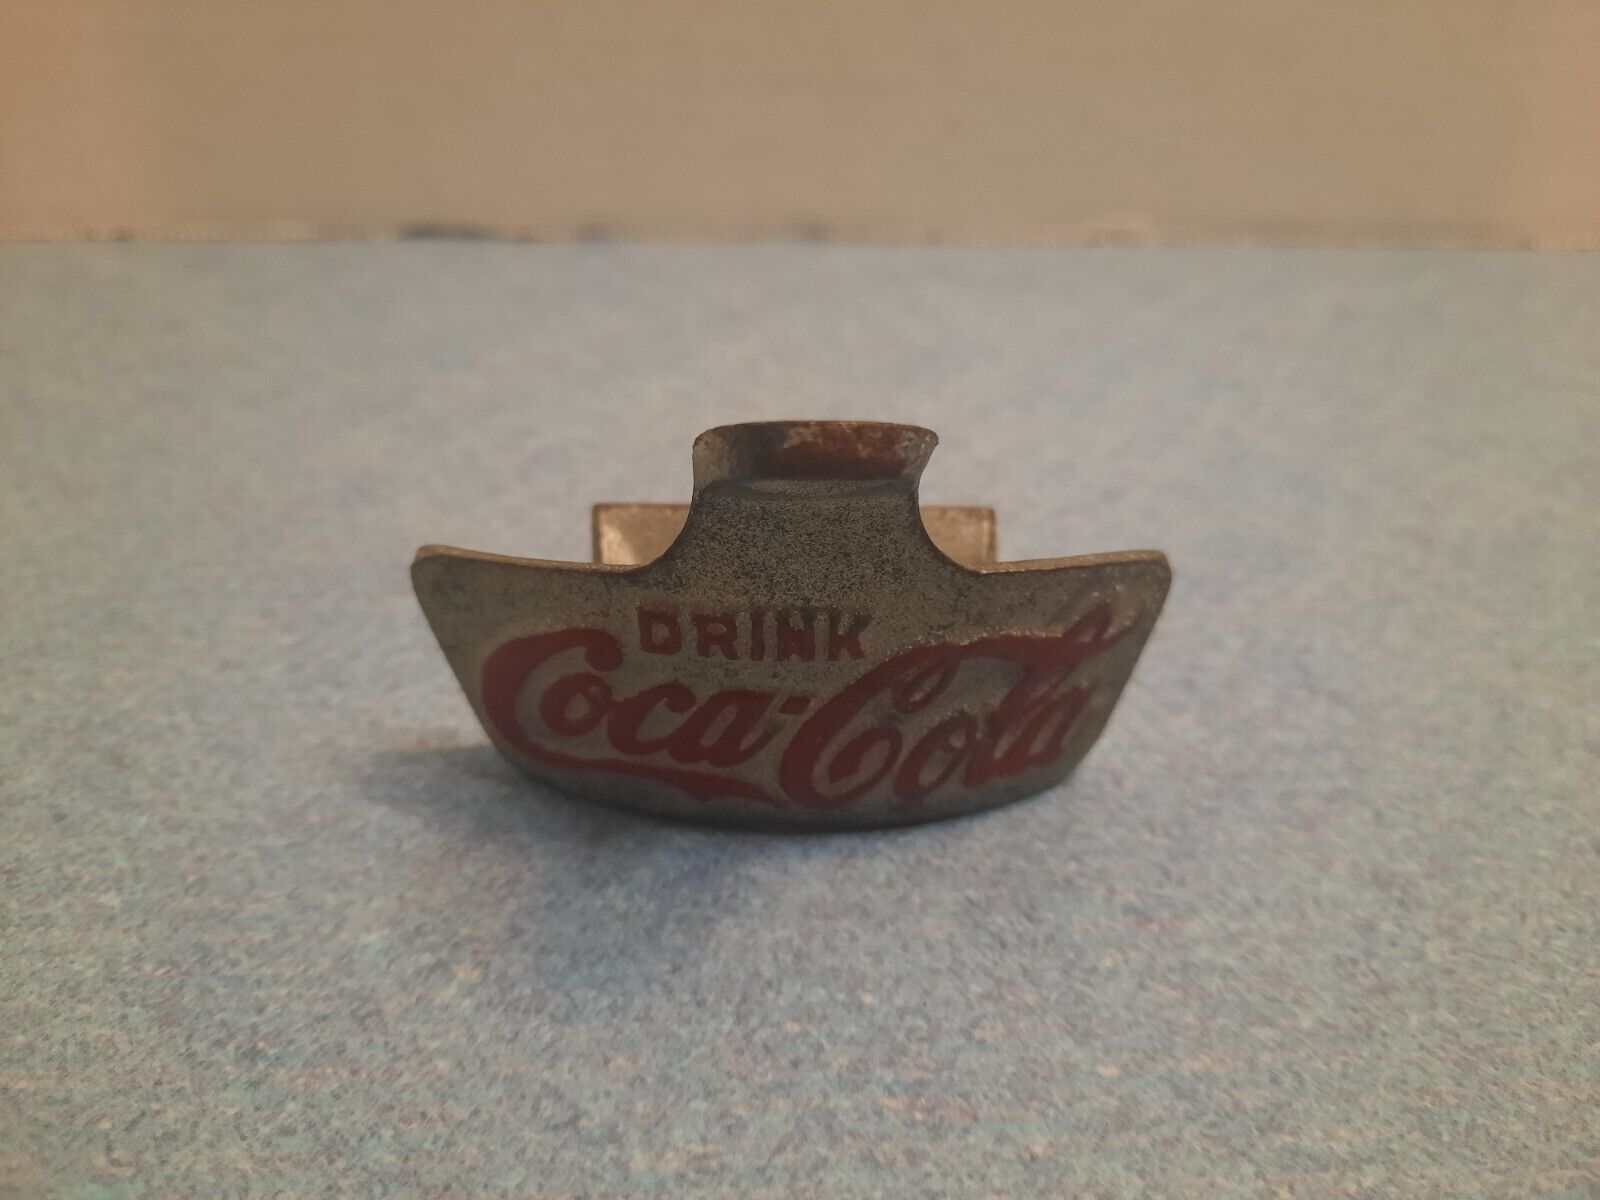 Vintage Drink Coca-Cola Coke Wall Mount Bottle Opener STAR X Made in Germany